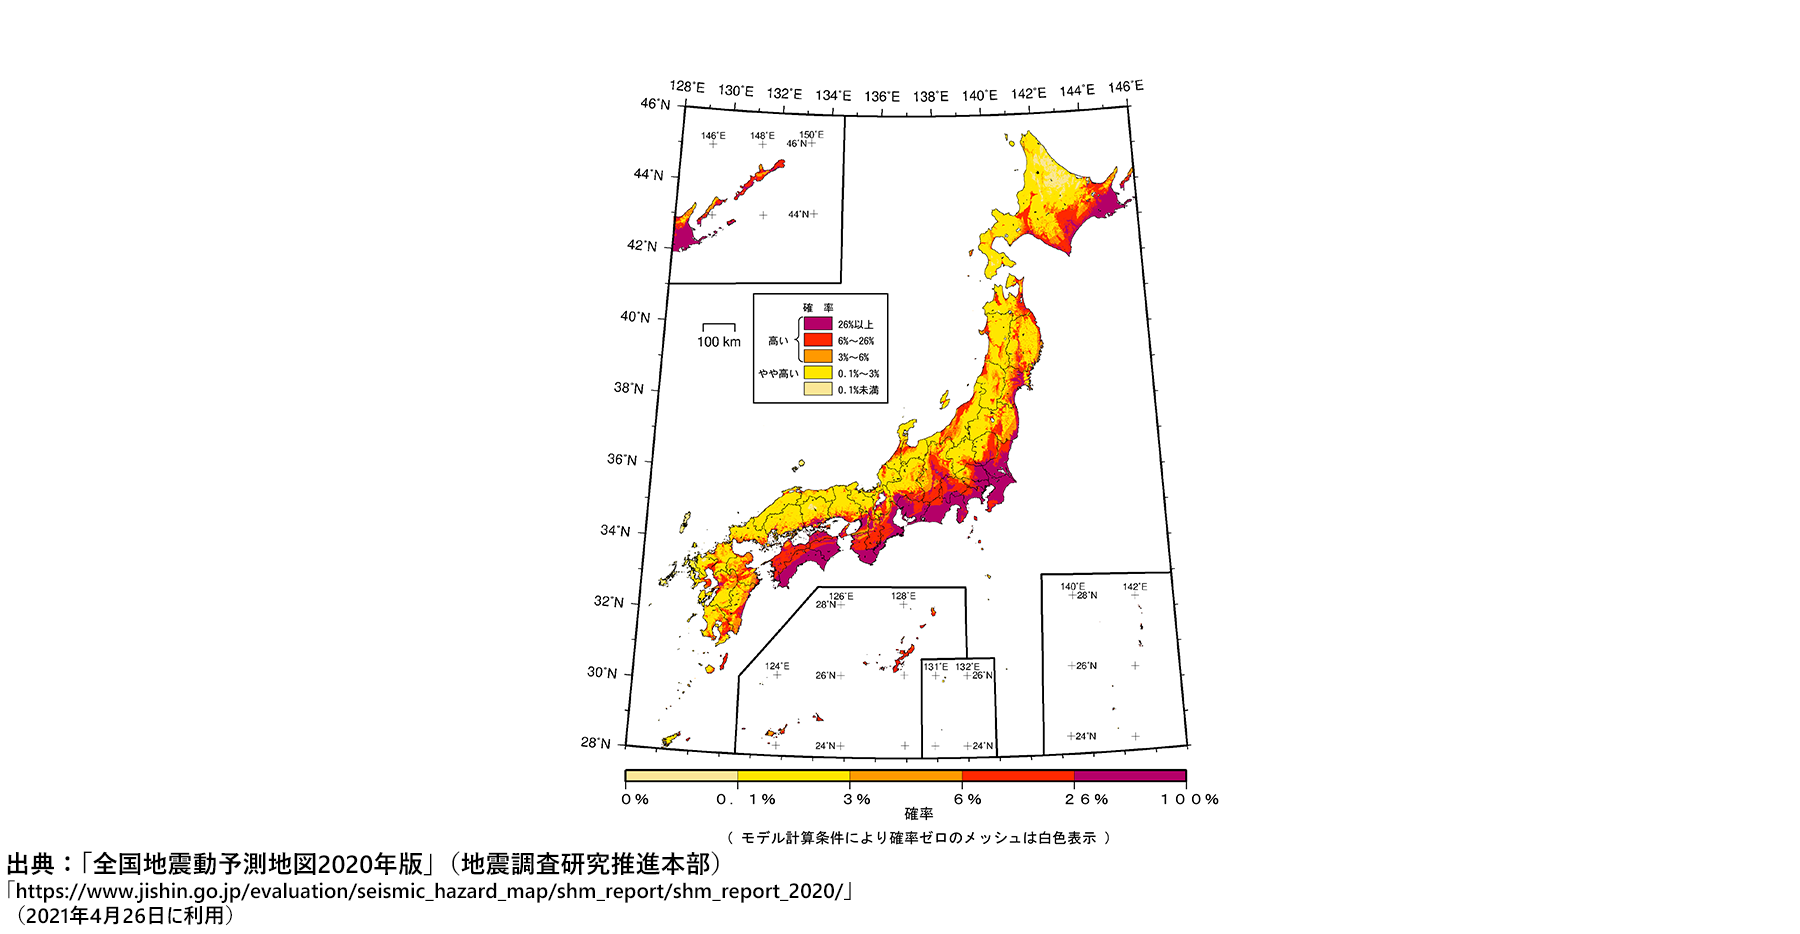 出典：「全国地震動予測地図2020年版」（地震調査研究推進本部） 「https://www.jishin.go.jp/evaluation/seismic_hazard_map/shm_report/shm_report_2020/」（2021年4月26日に利用）